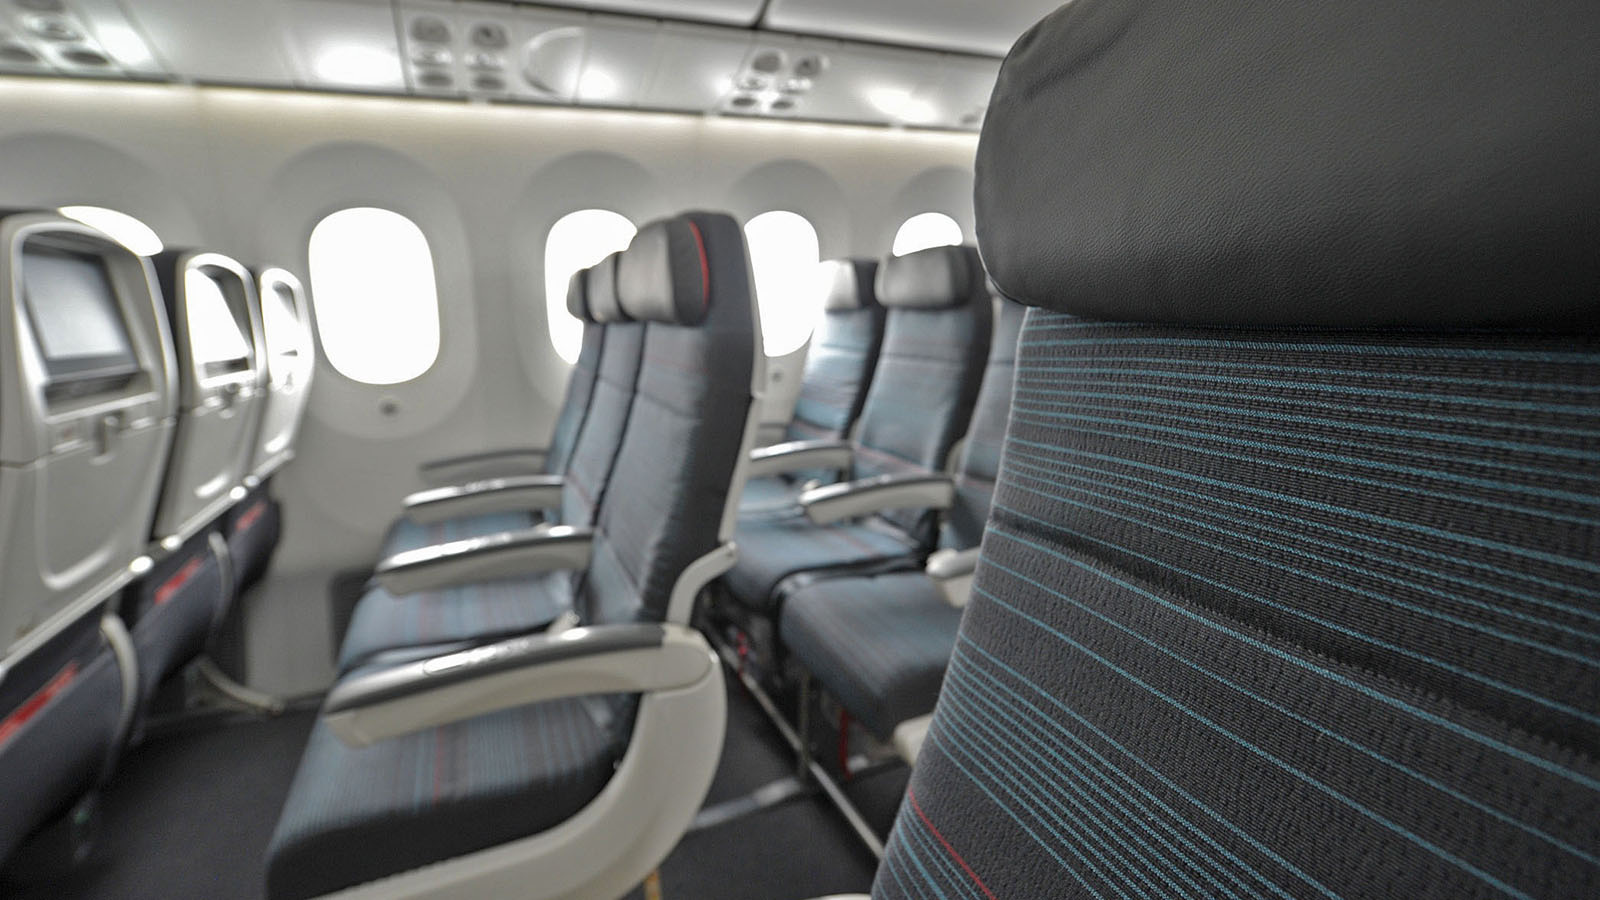 Air Canada Boeing 787 Economy Class